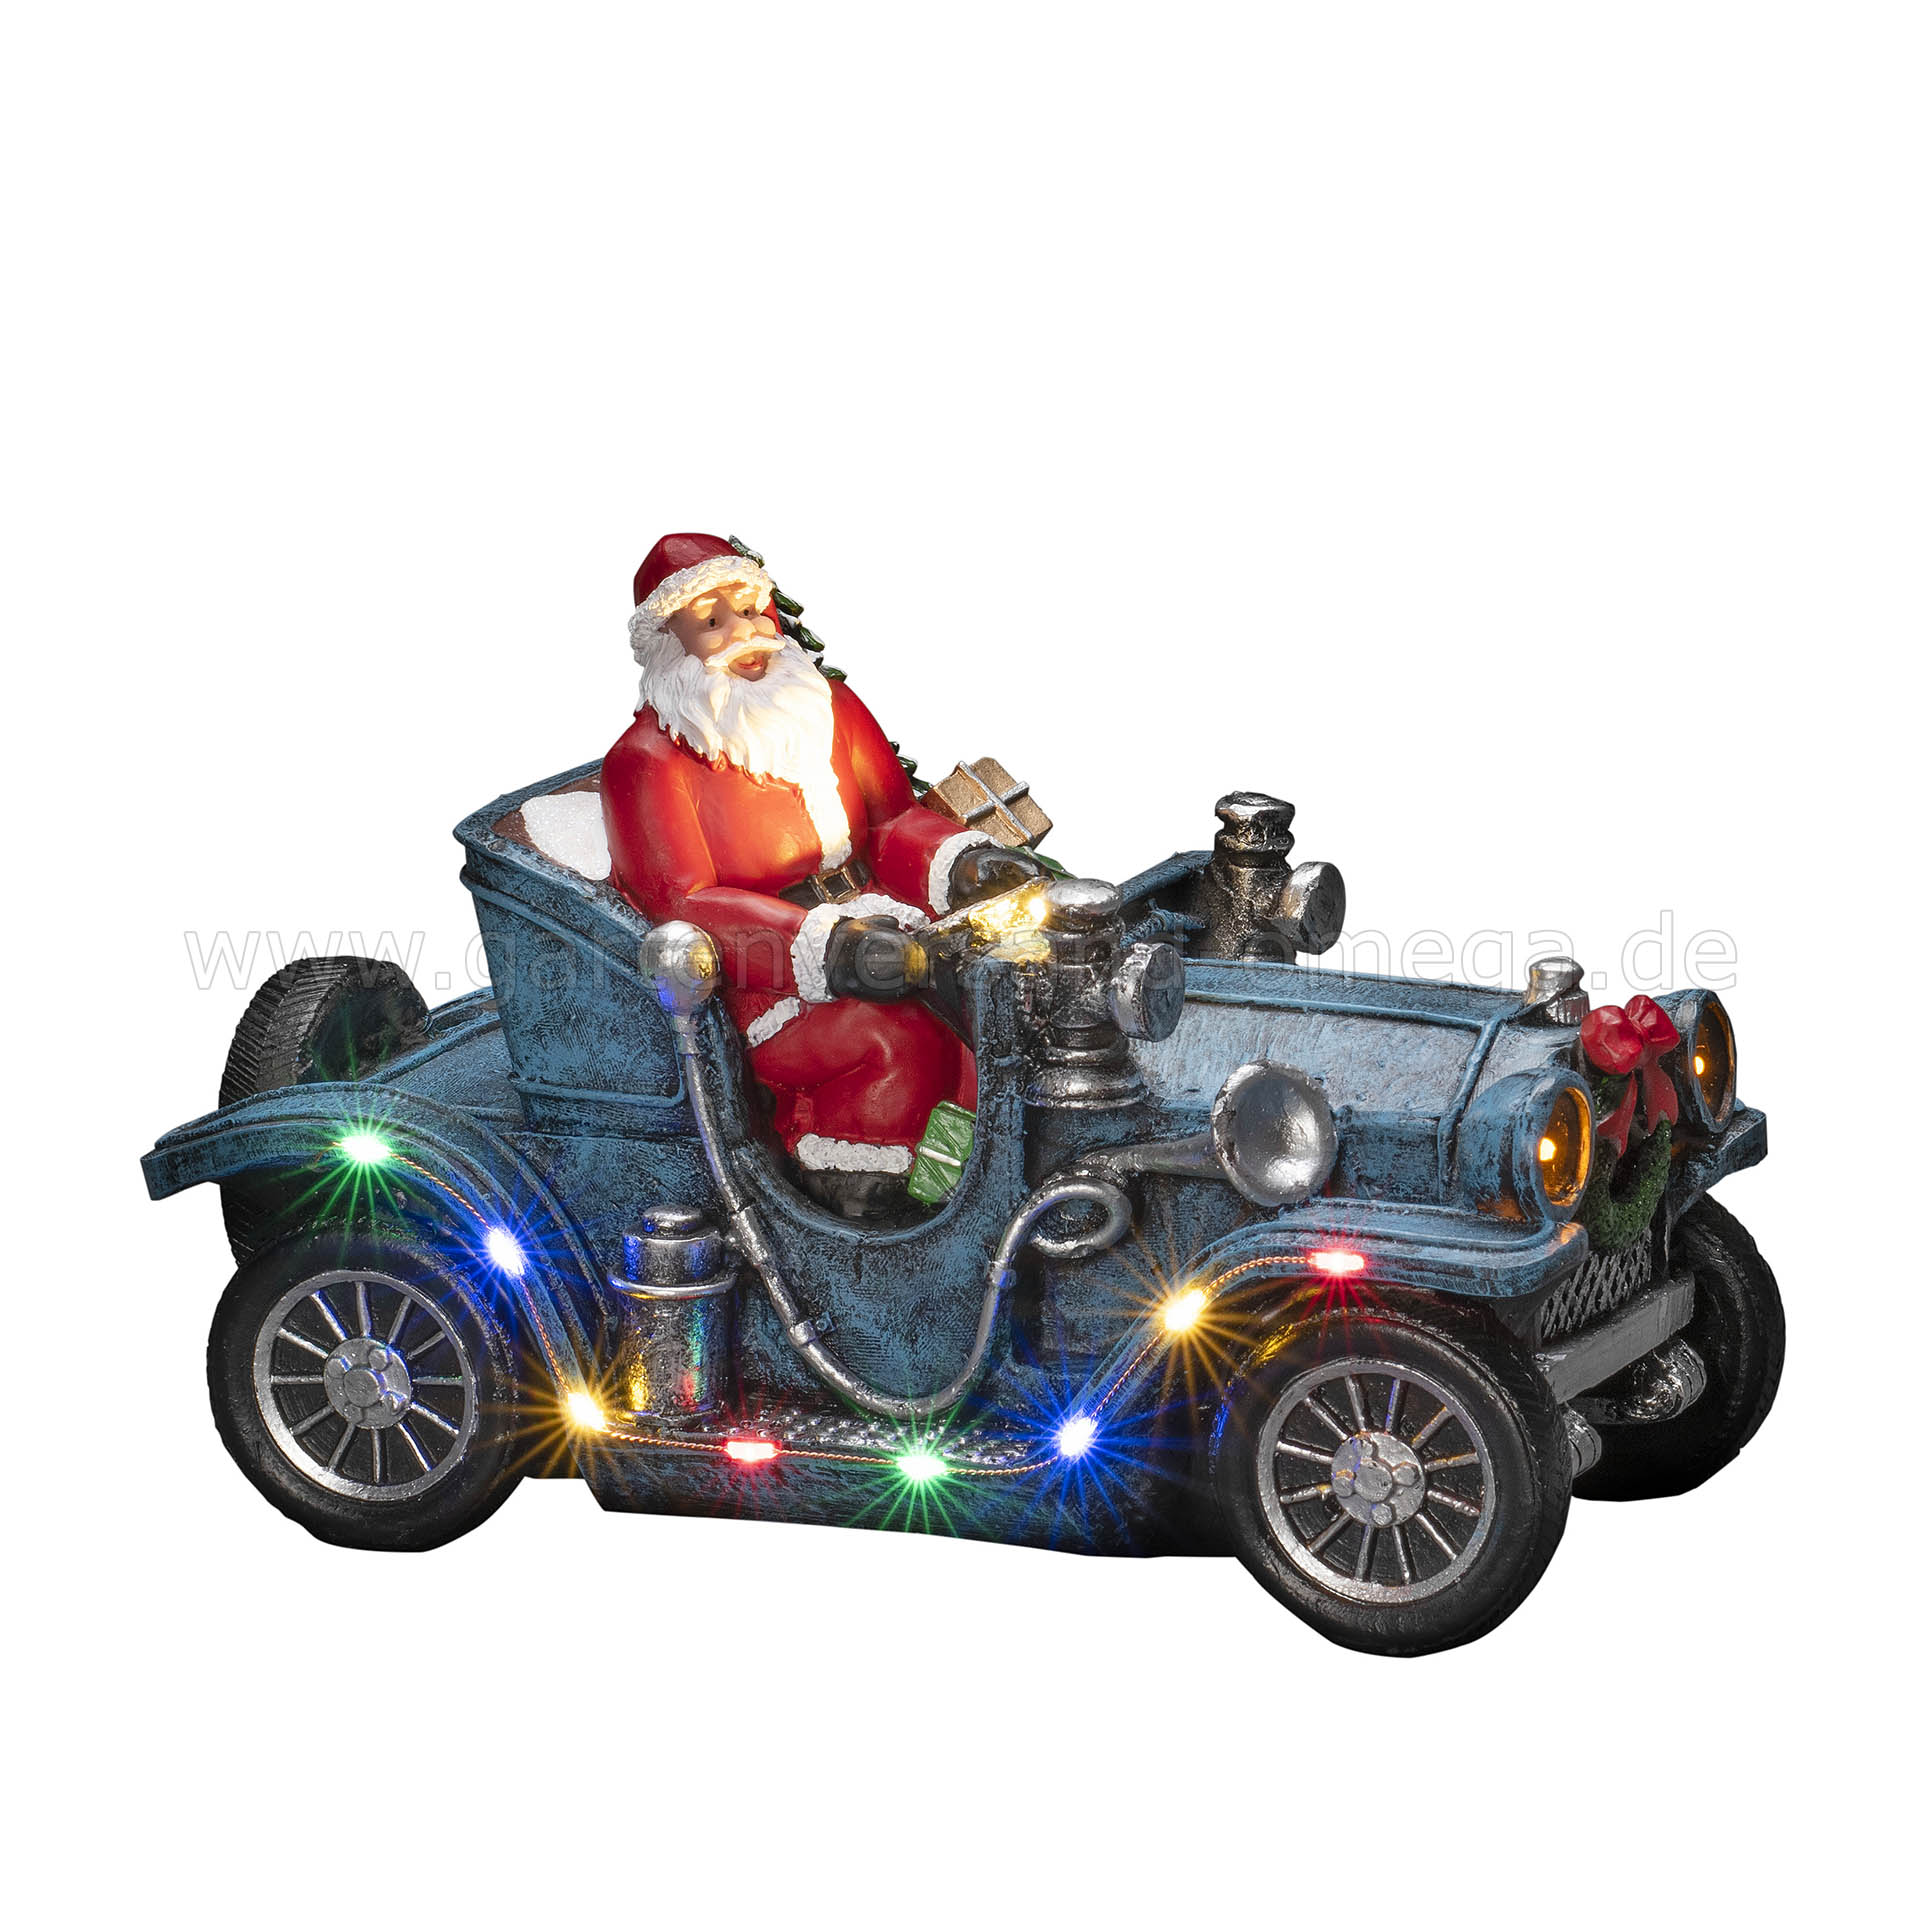 Oldtimer Auto Auto Weihnachtsmann, mit im Weihnachten, Weihnachtsmann, mit Weihnachtsdeko LED-Szenerie Deko-Auto LED-Beleuchtung - LED-Figur Weihnachtsmann Schreibtischdekoration Auto, Weihnachtsmann, LED Auto